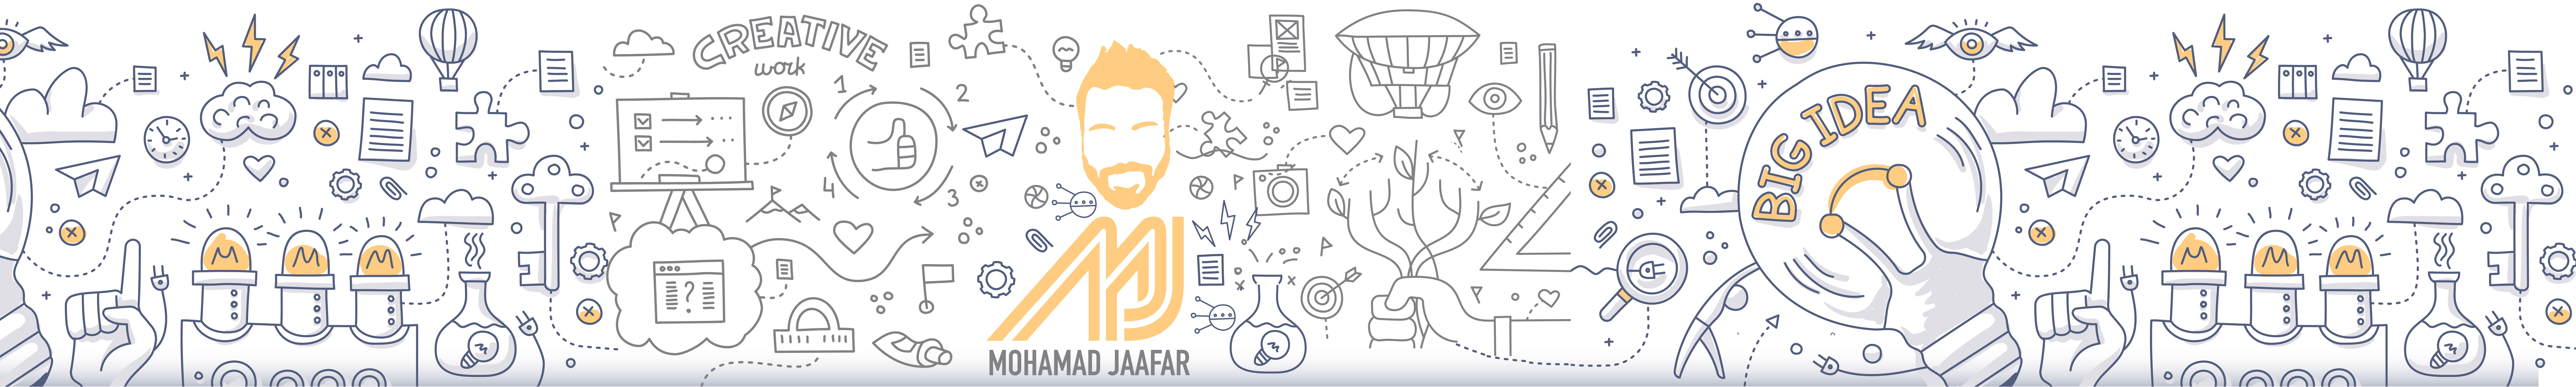 mohamad jaafar's profile banner